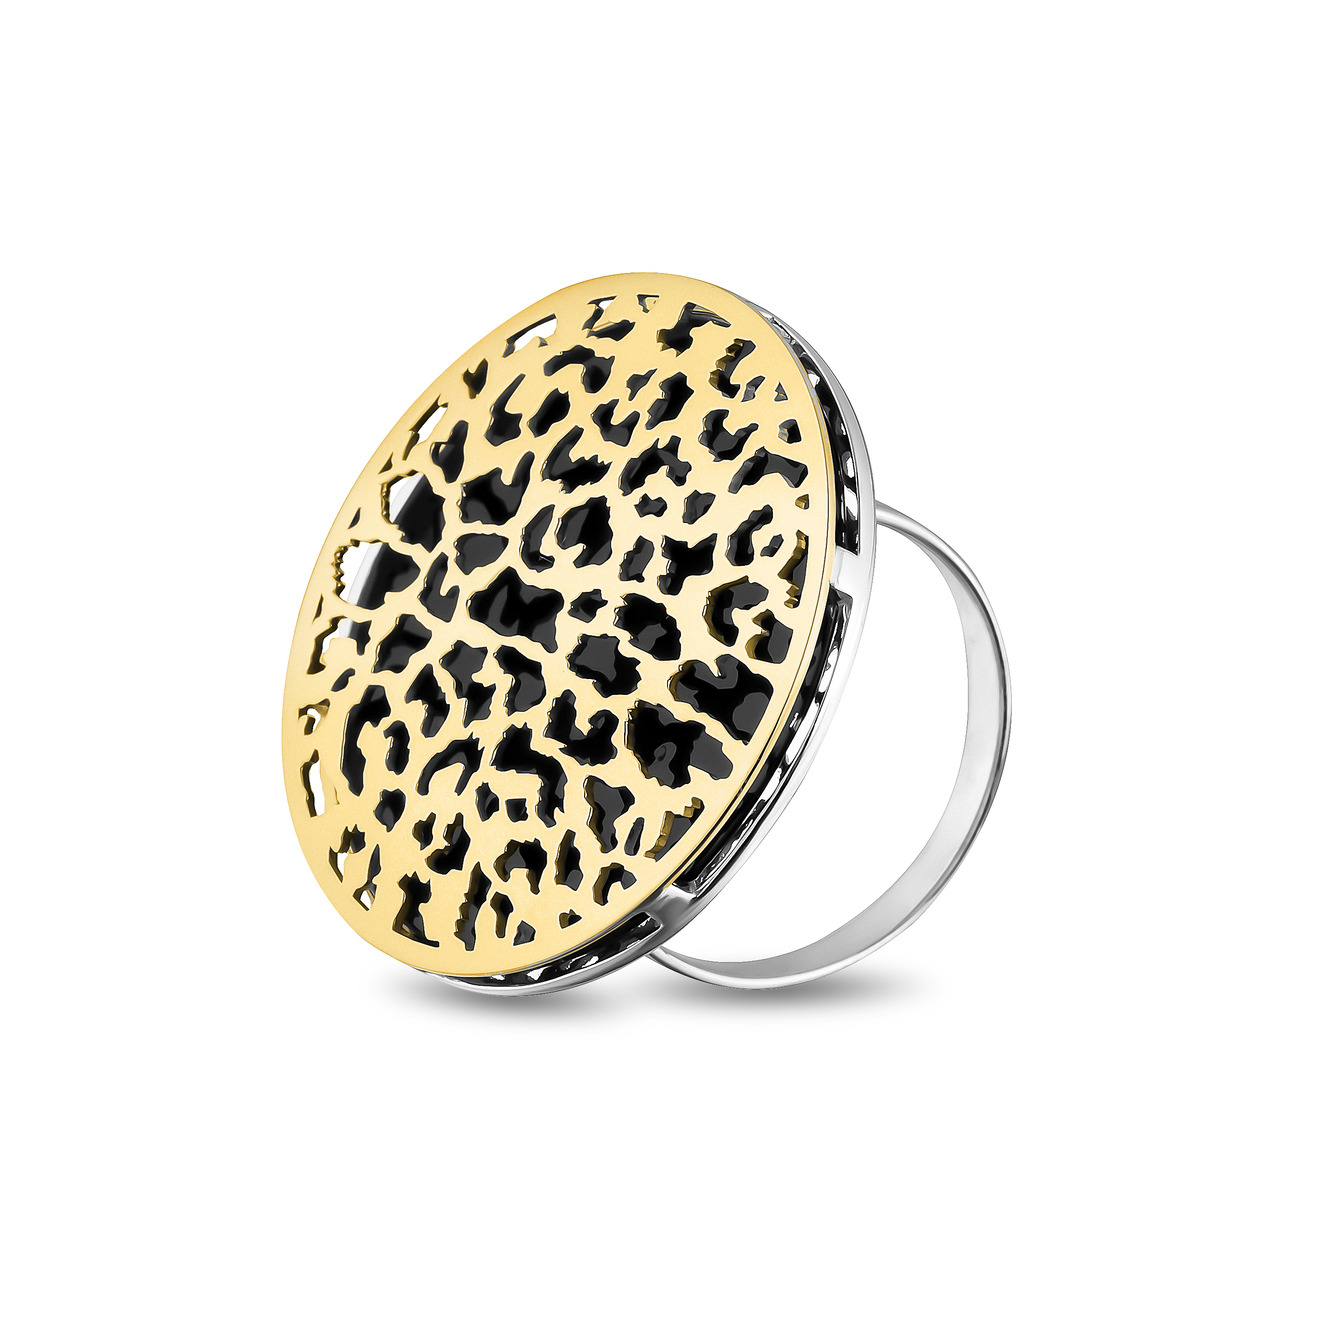 LUTA Jewelry Большое позолоченное кольцо из серебра c леопардовым узором luta jewelry круглые серьги из серебра с леопардовым узором